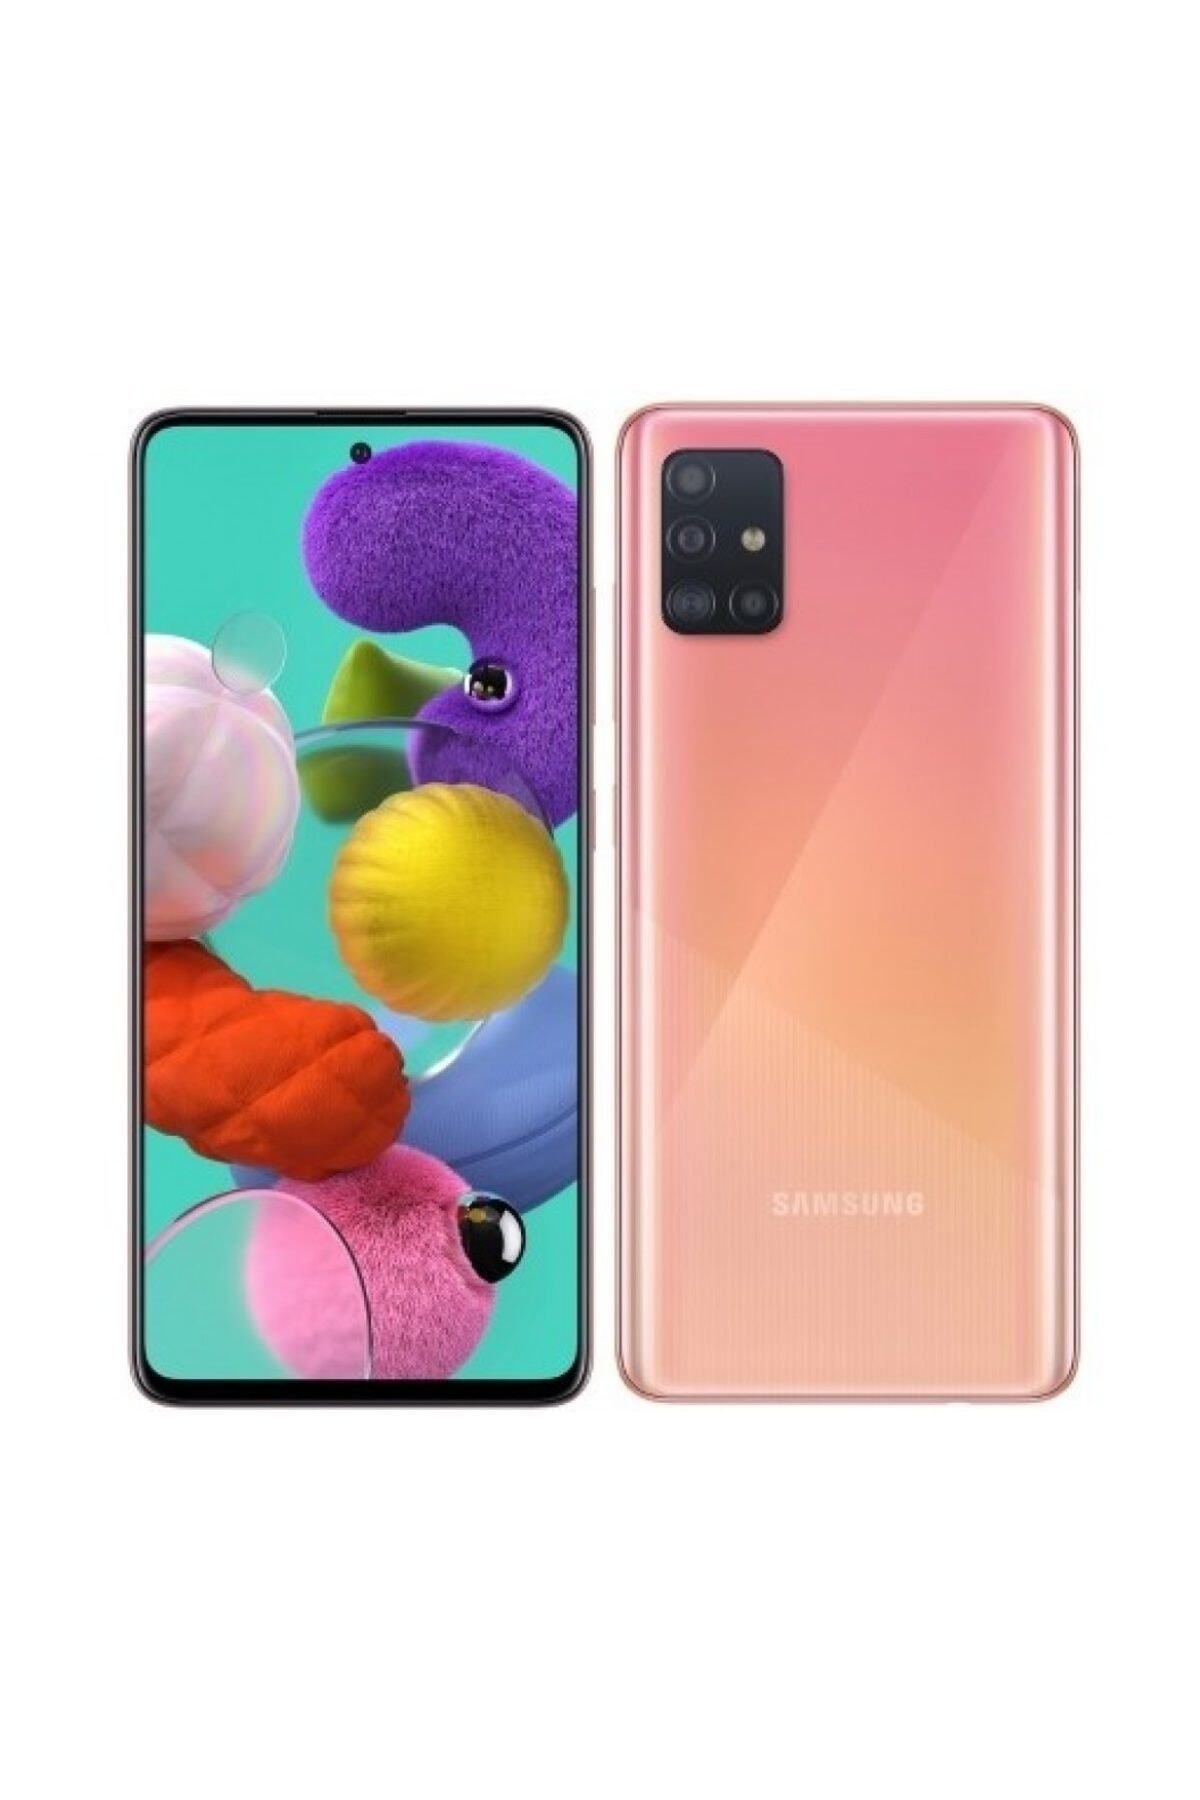 Samsung Yenilenmiş Samsung Galaxy A51 Crush Pink 128GB B Kalite (12 Ay Garantili)